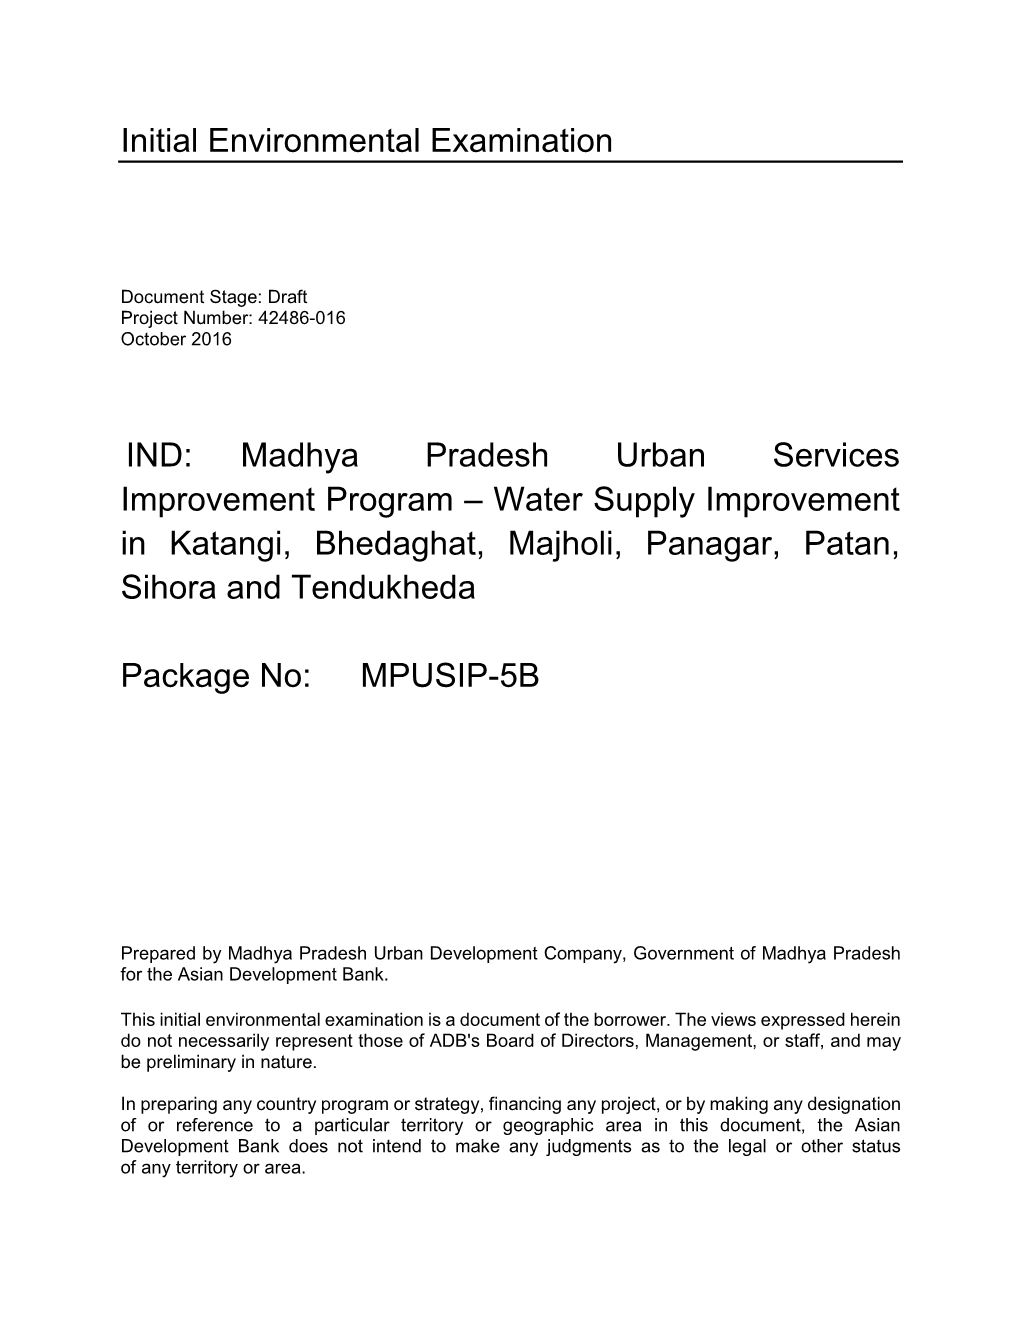 Madhya Pradesh Urban Services Improvement Project: Package 5B